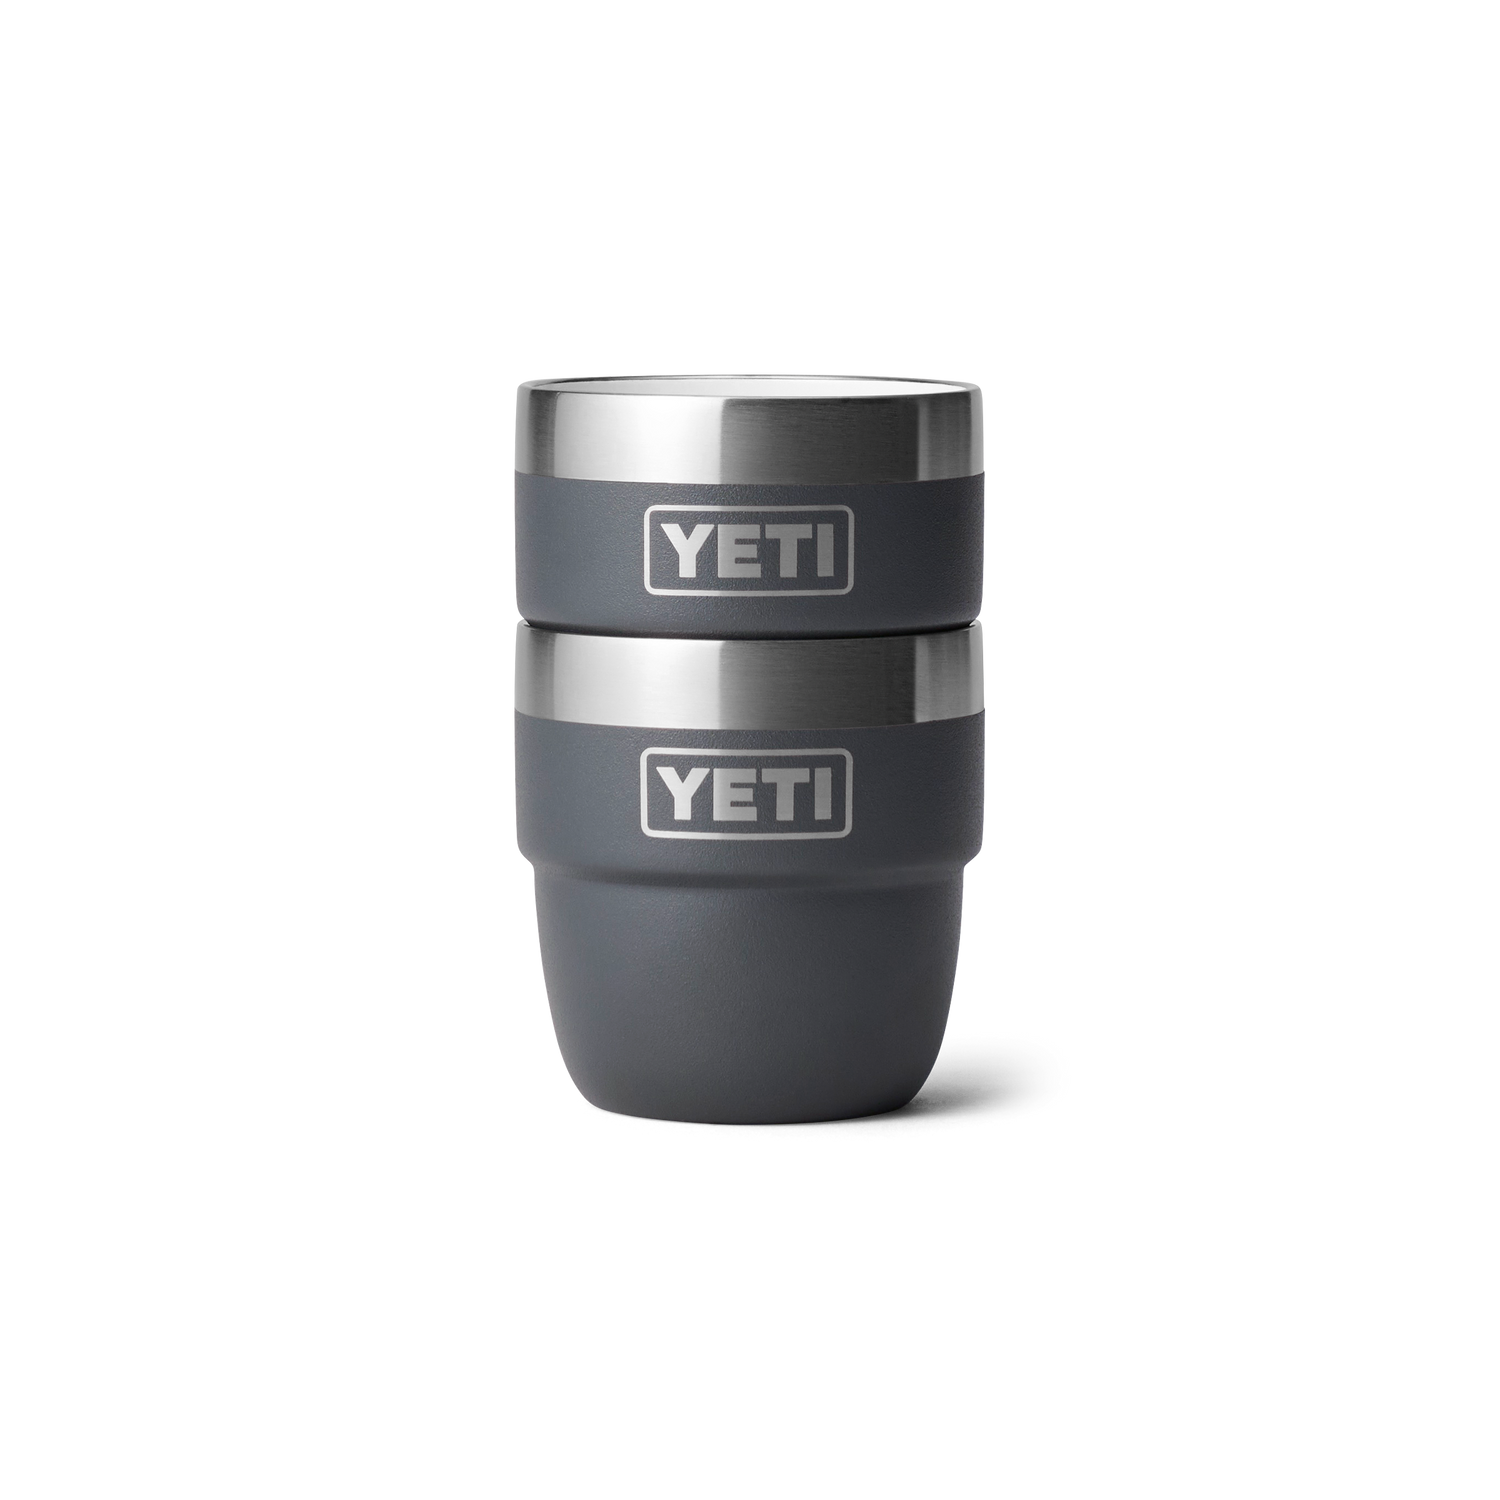 Yeti Rambler Bottle Holder Small Charcoal